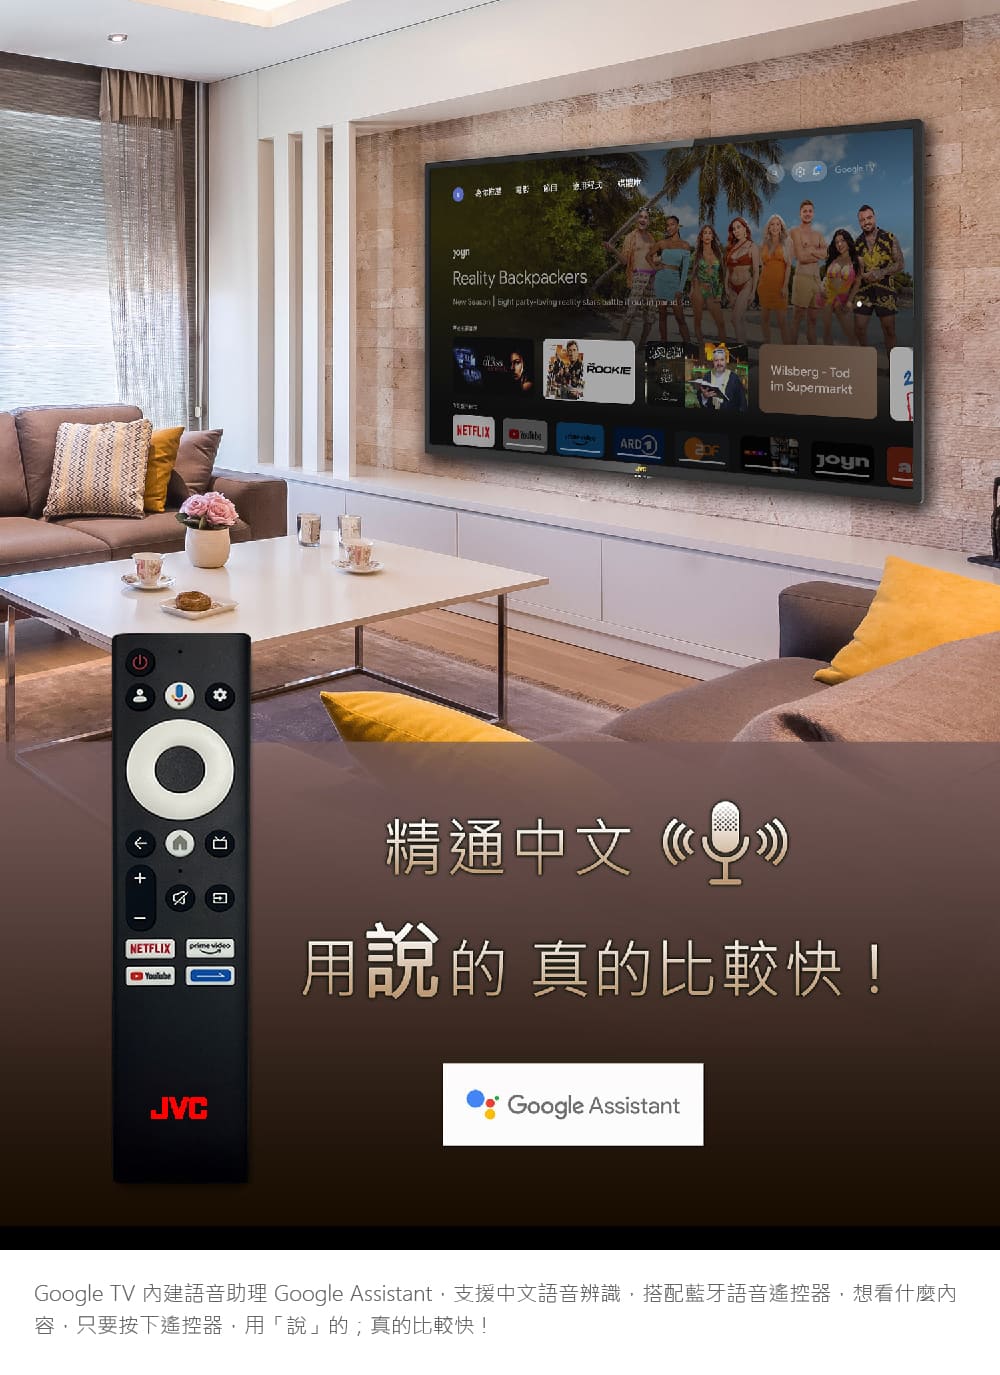 Google TV 內建語音助理 Google Assistant,支援中文語音辨識,搭配藍牙語音遙控器,想看什麼內